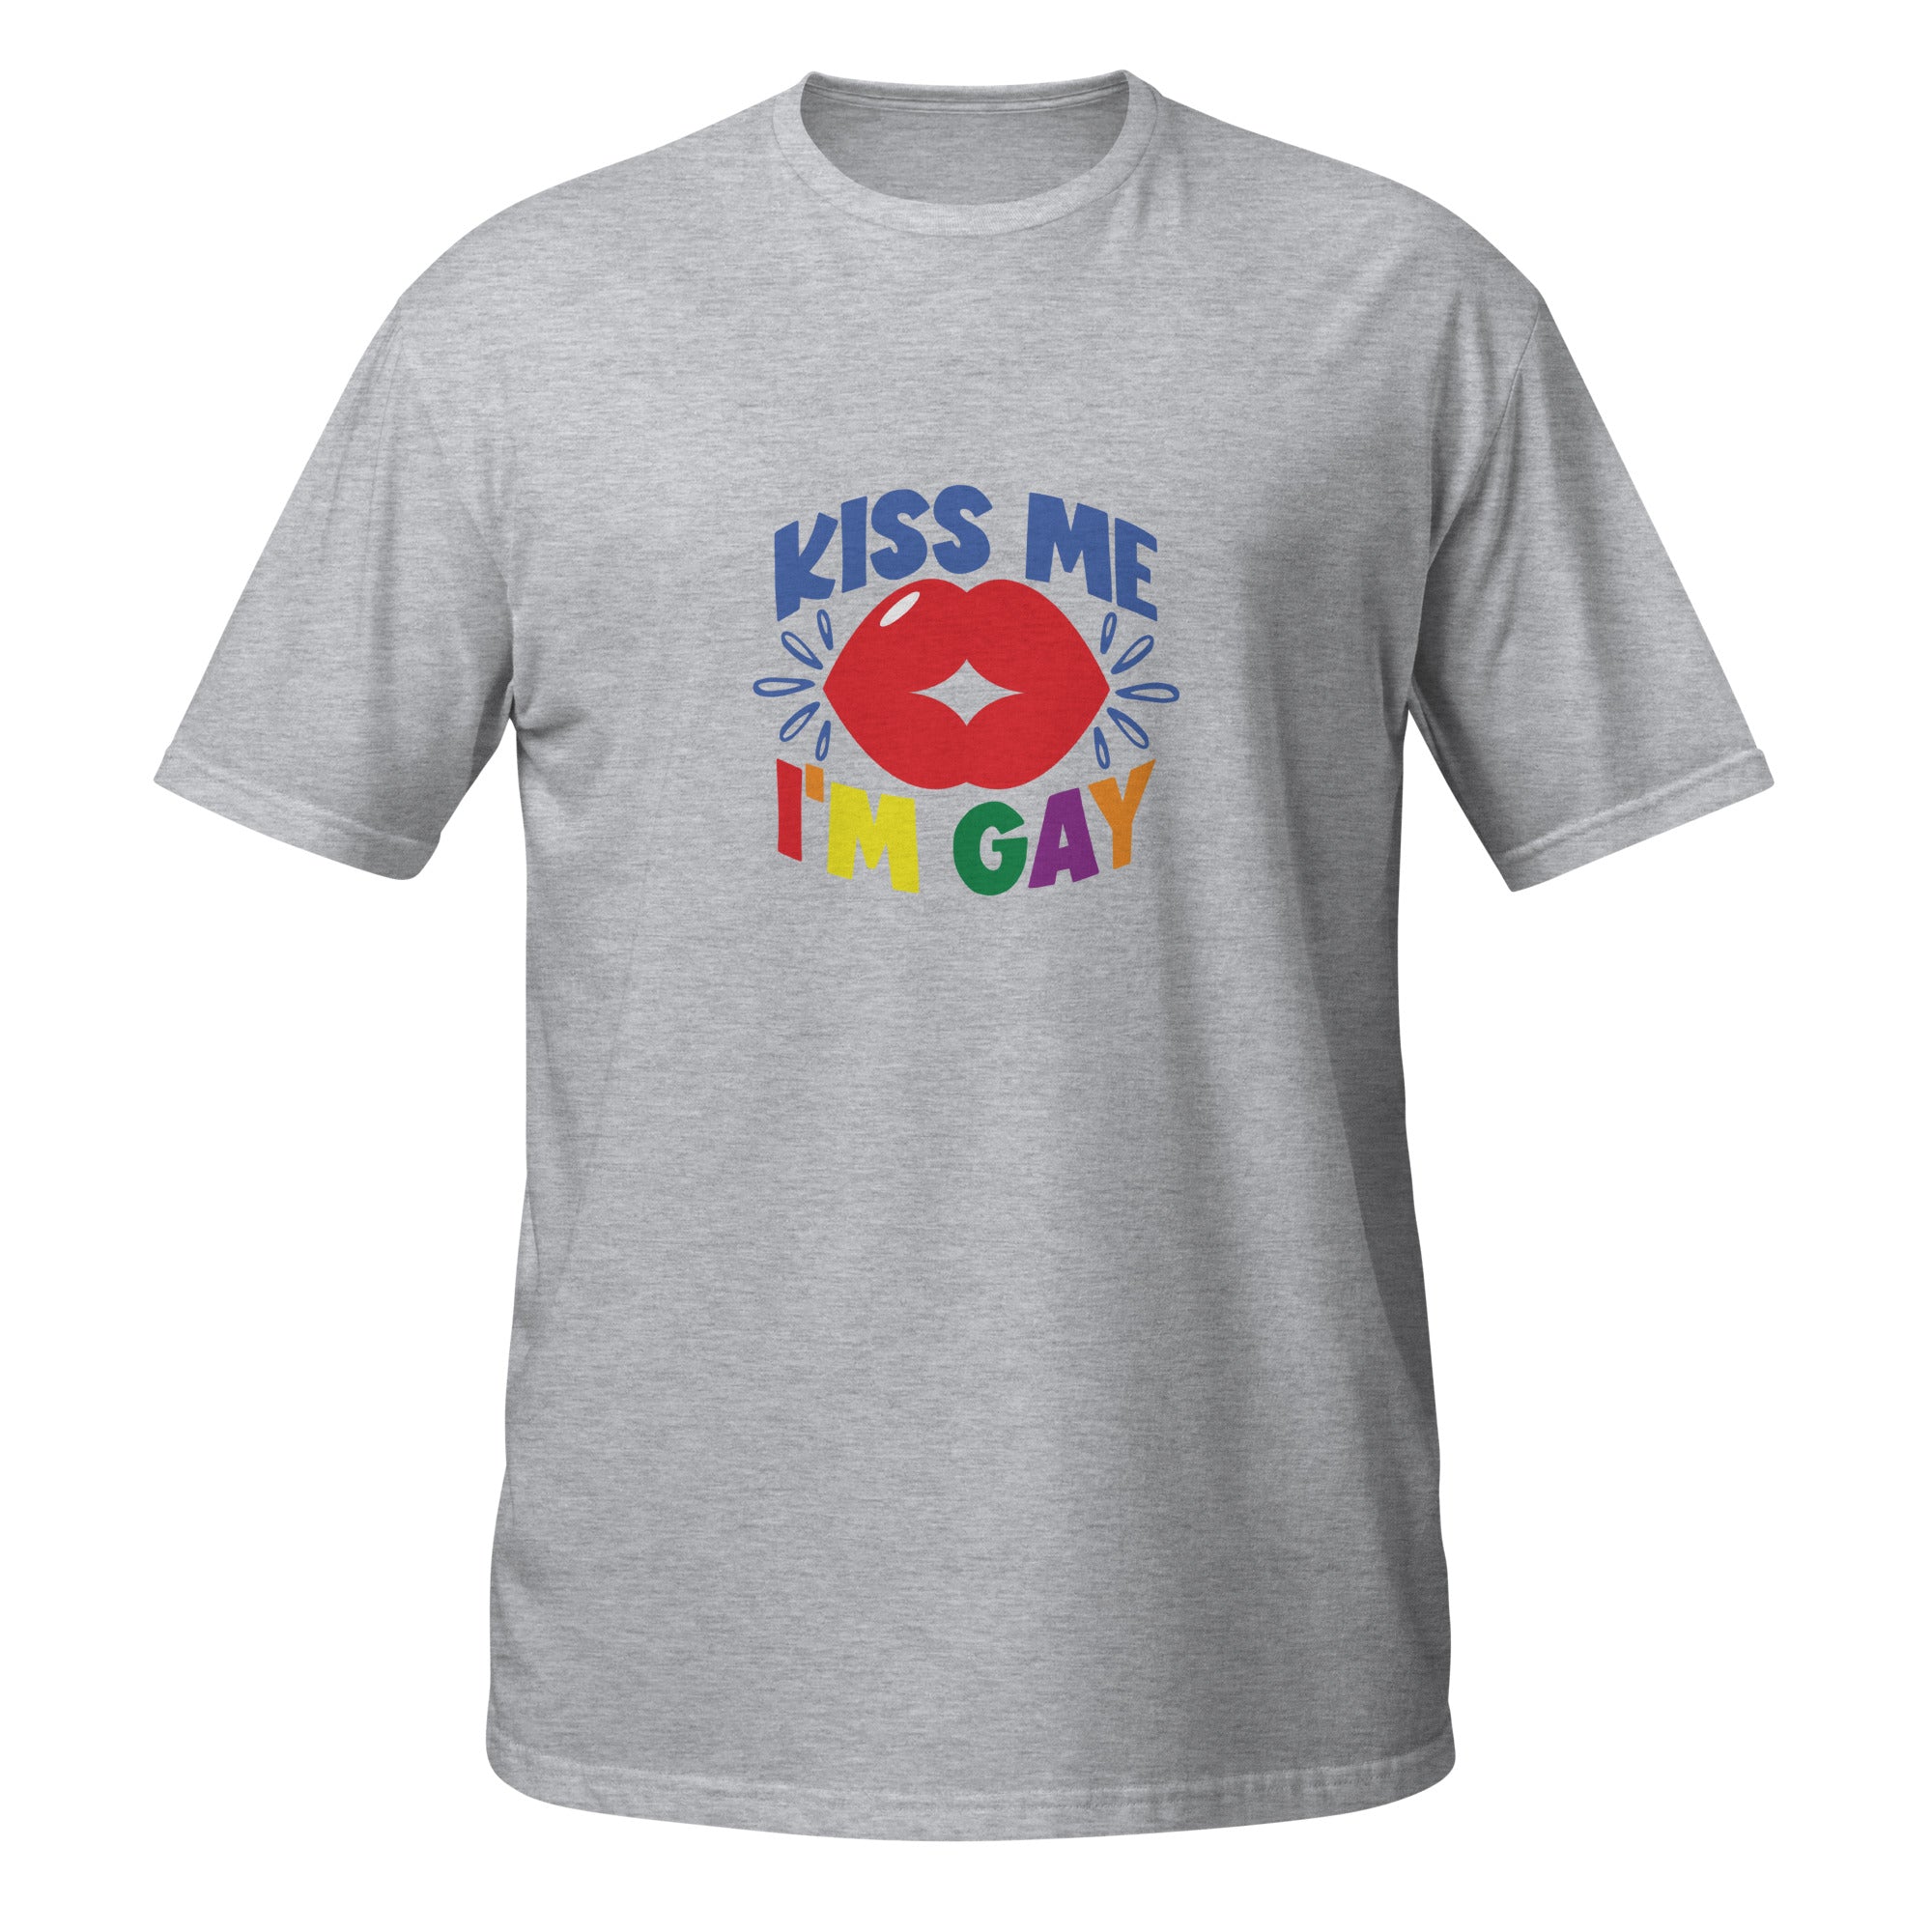 Short-Sleeve Unisex T-Shirt- Kiss me I'm gay